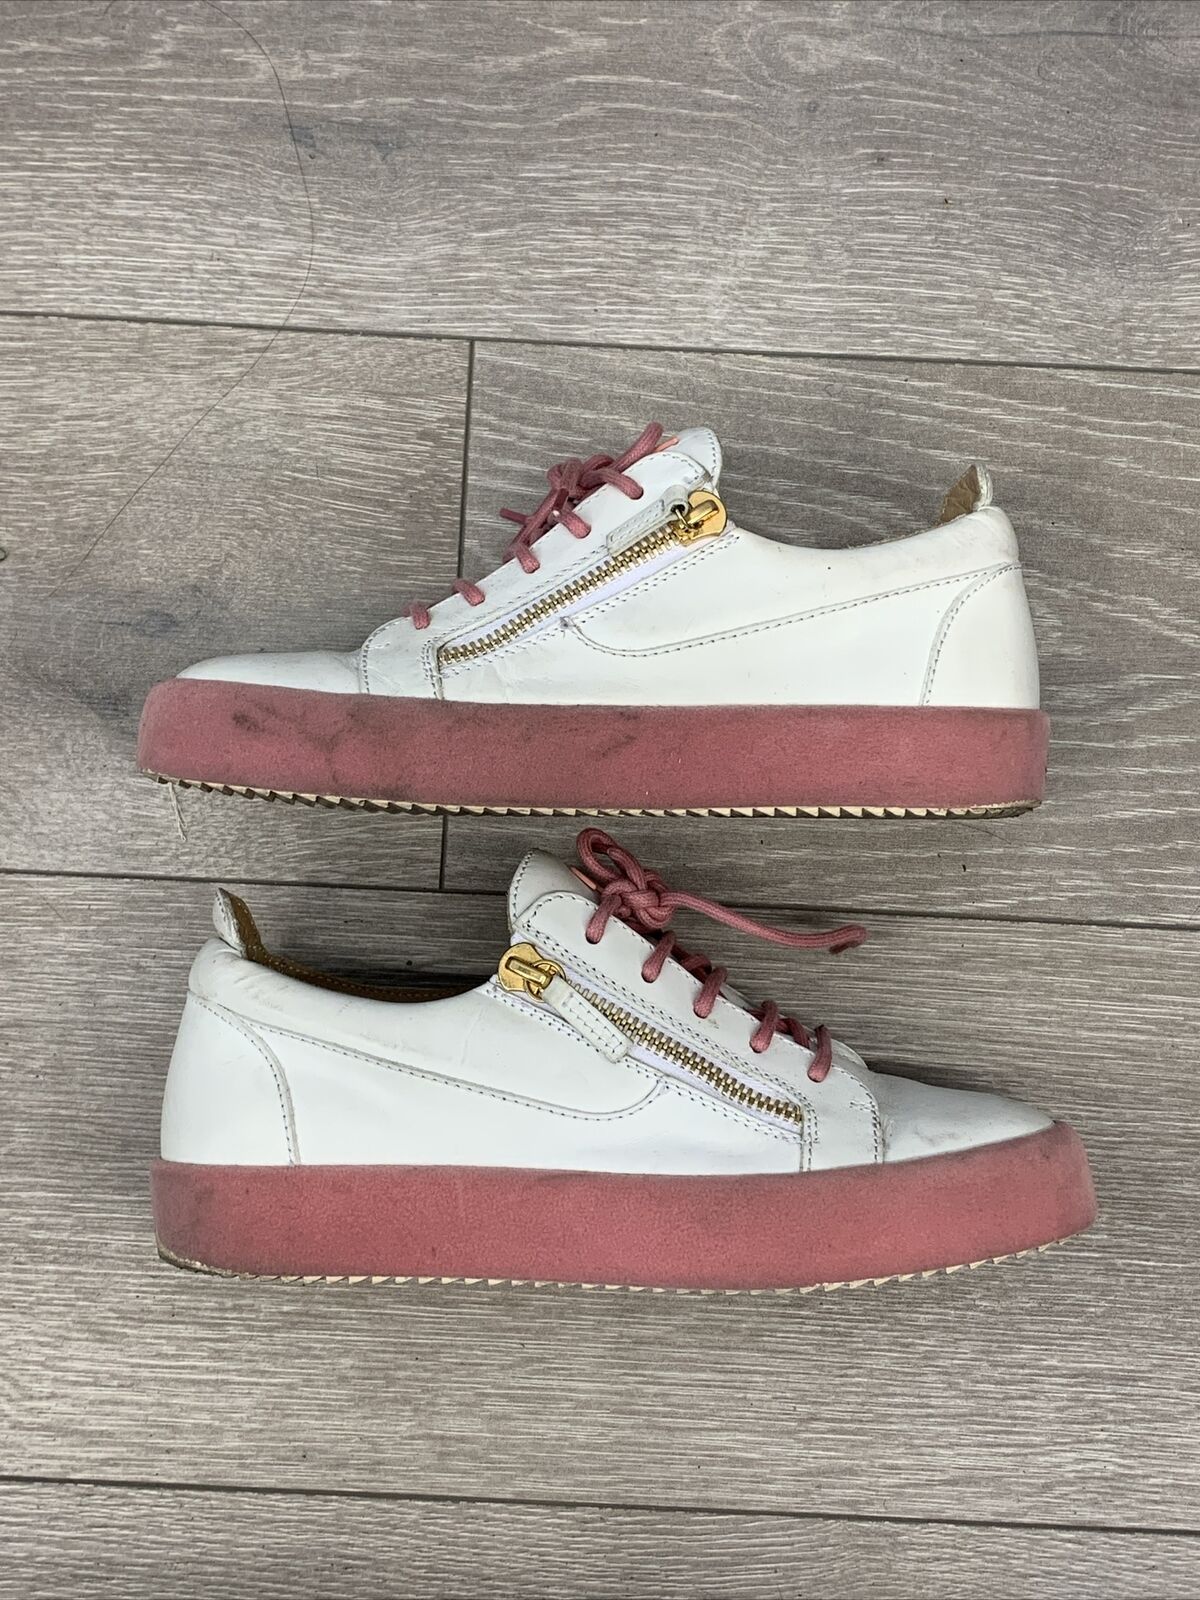 Giuseppe Zanotti White Leather Sneakers w/ Pink Suede Trim sz 39.5